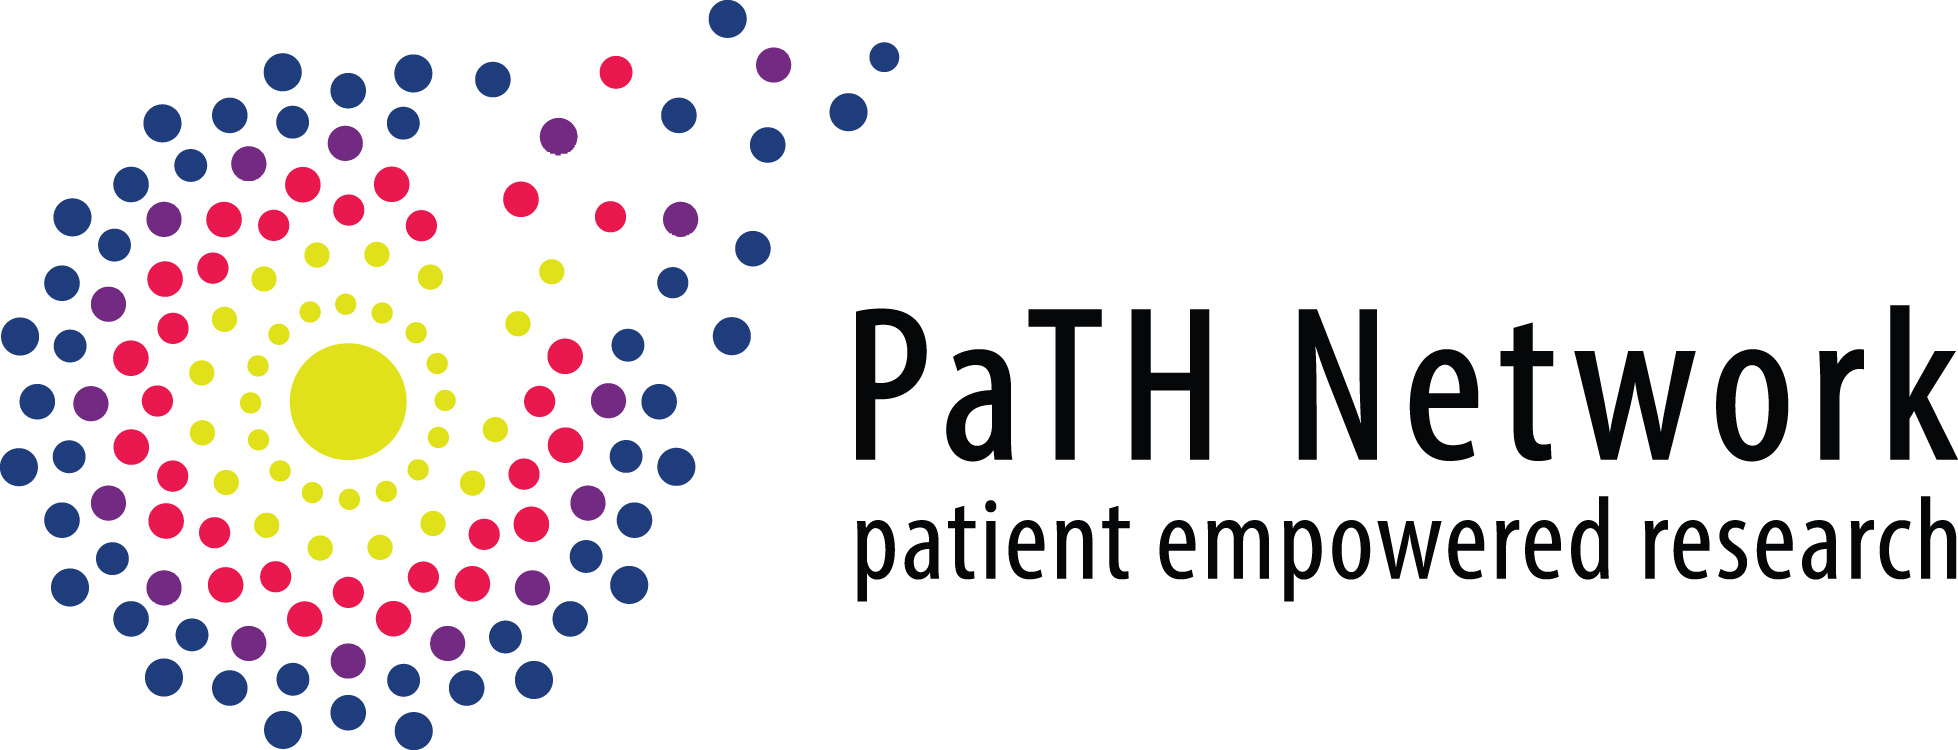 PaTH Network